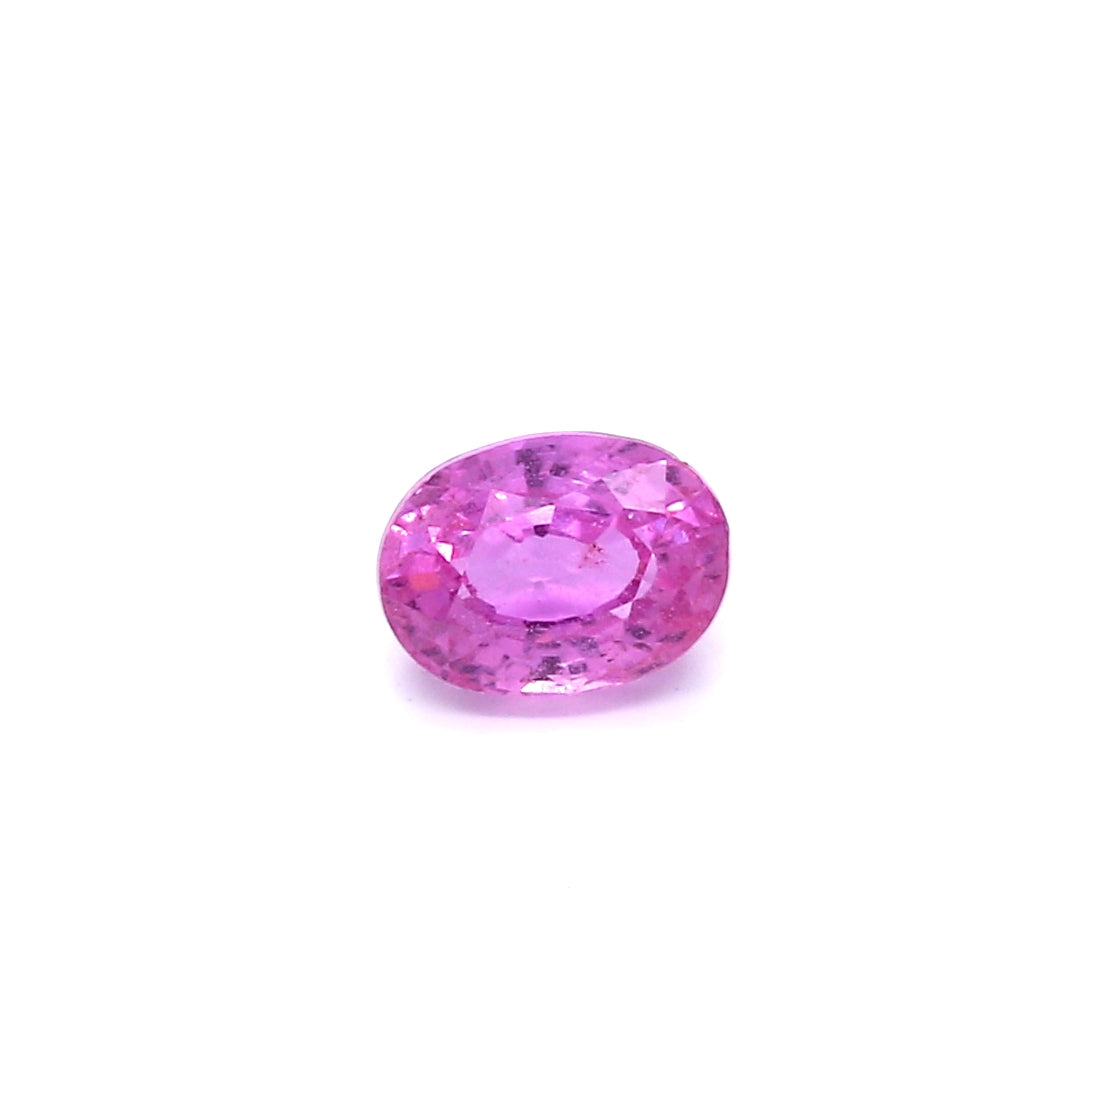 0.93ct Purplish Pink, Oval Sapphire, Heated, Madagascar - 6.19 x 4.59 x 3.45mm